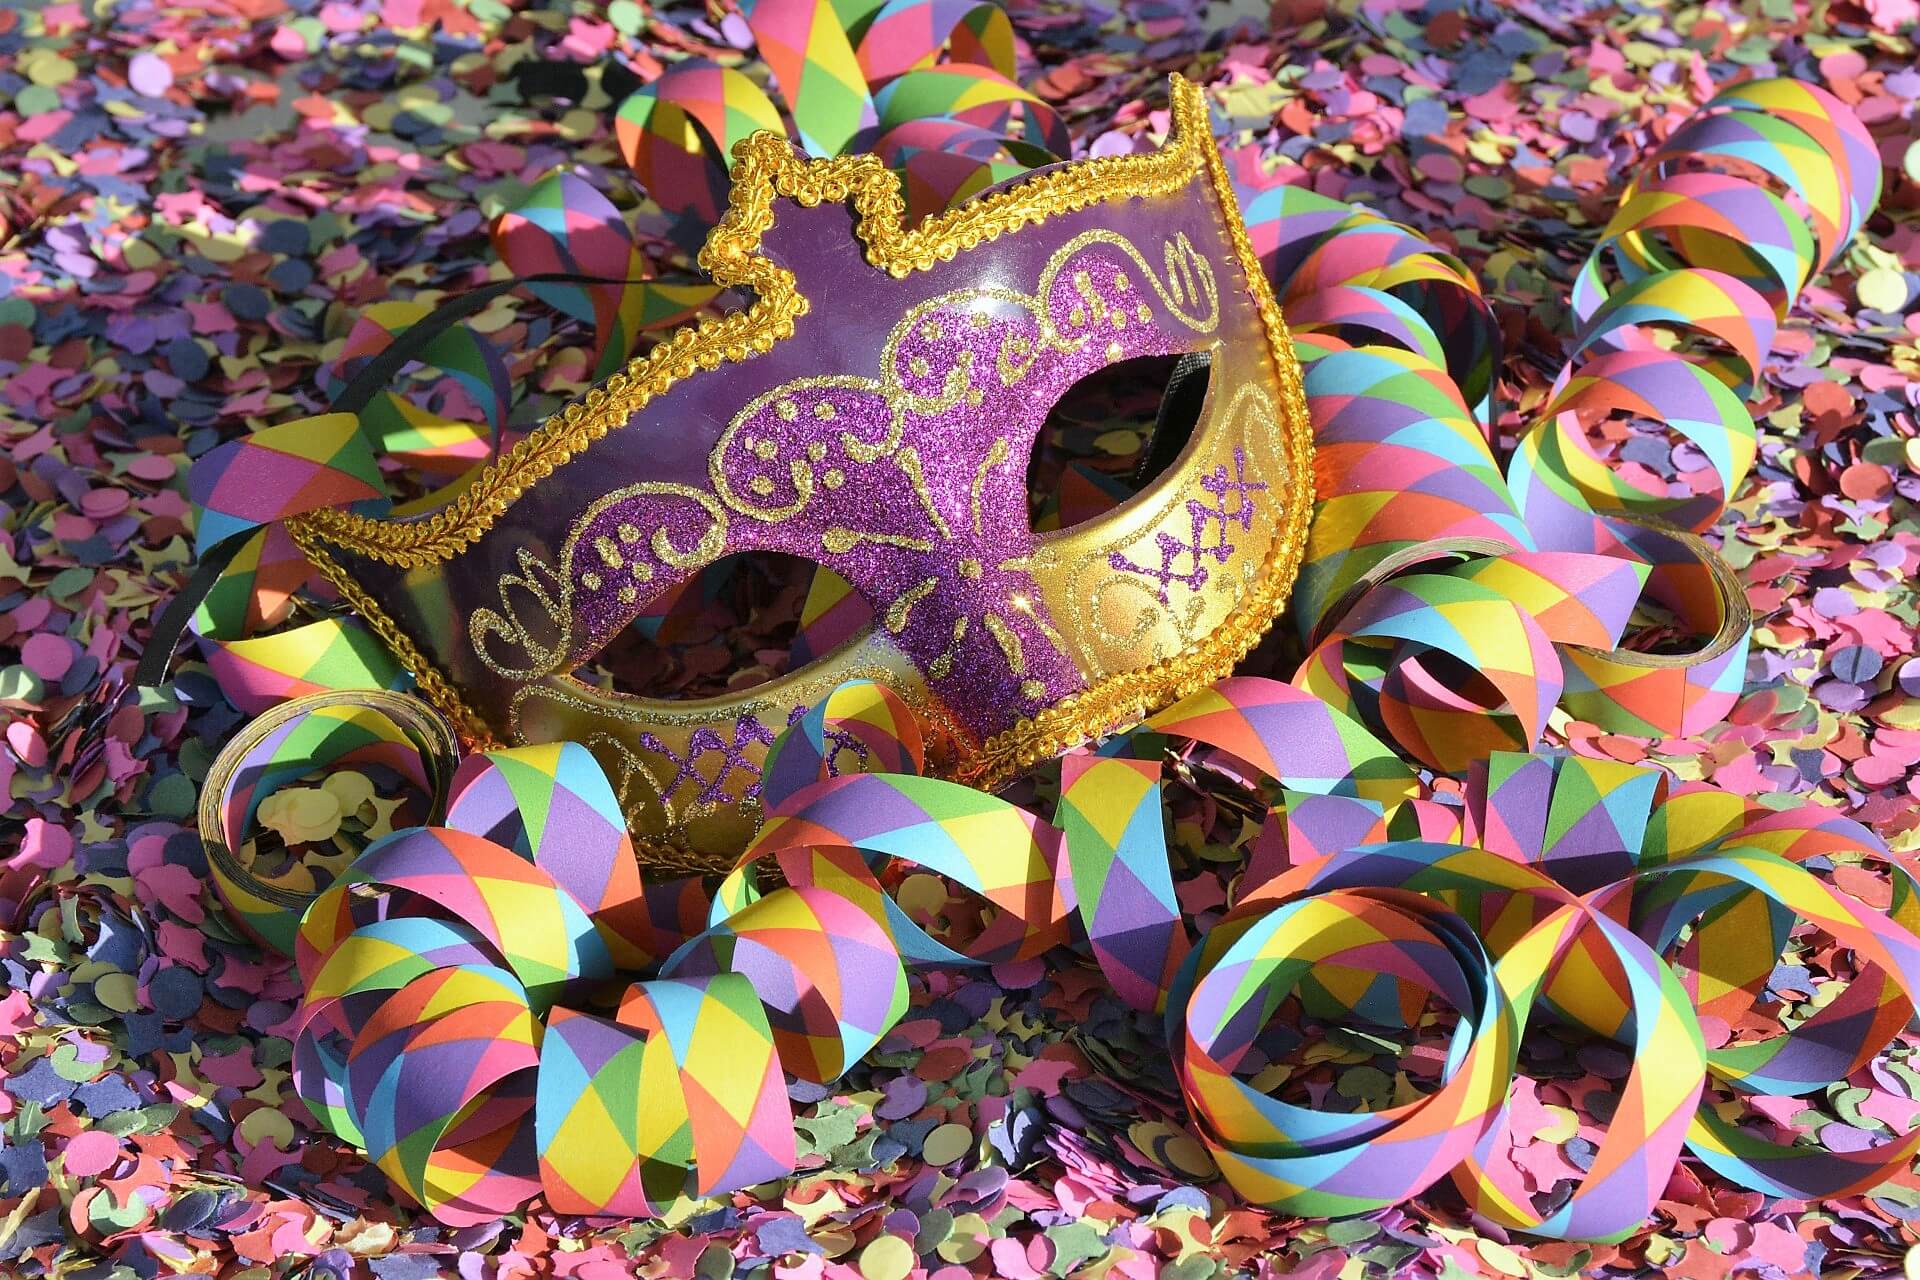 https://helmutbestermann.de/wp-content/uploads/2018/01/Karneval-Fasching-Gadgets-Masken-Kost%C3%BCme-Party-Saufen.jpg